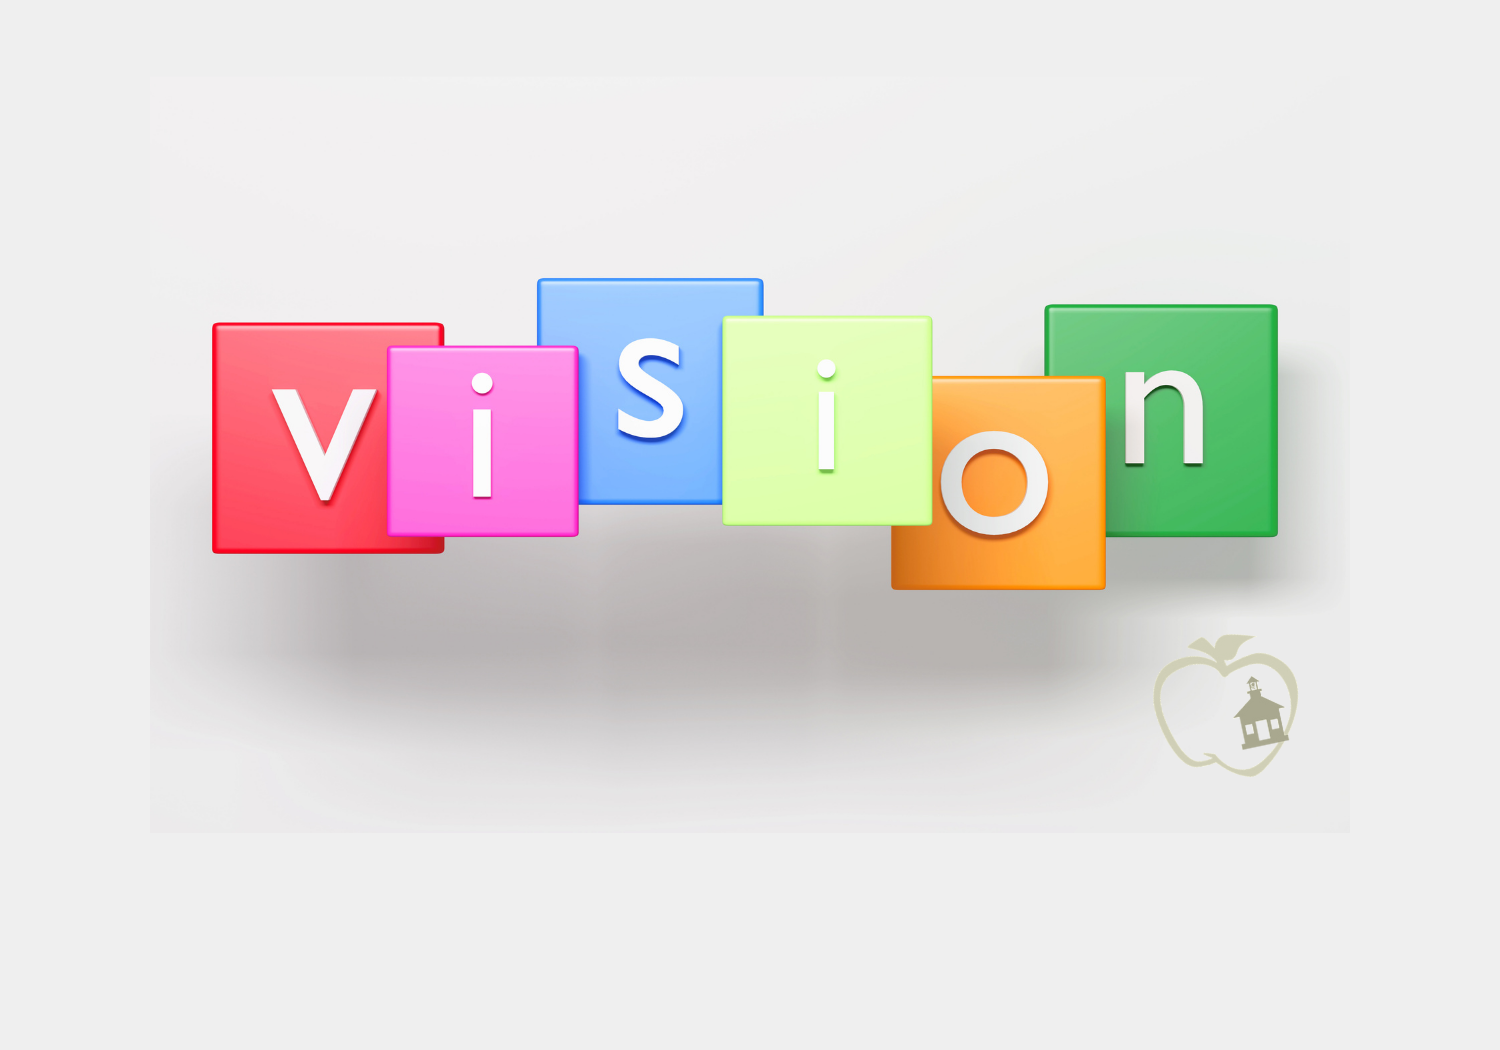 vision 1